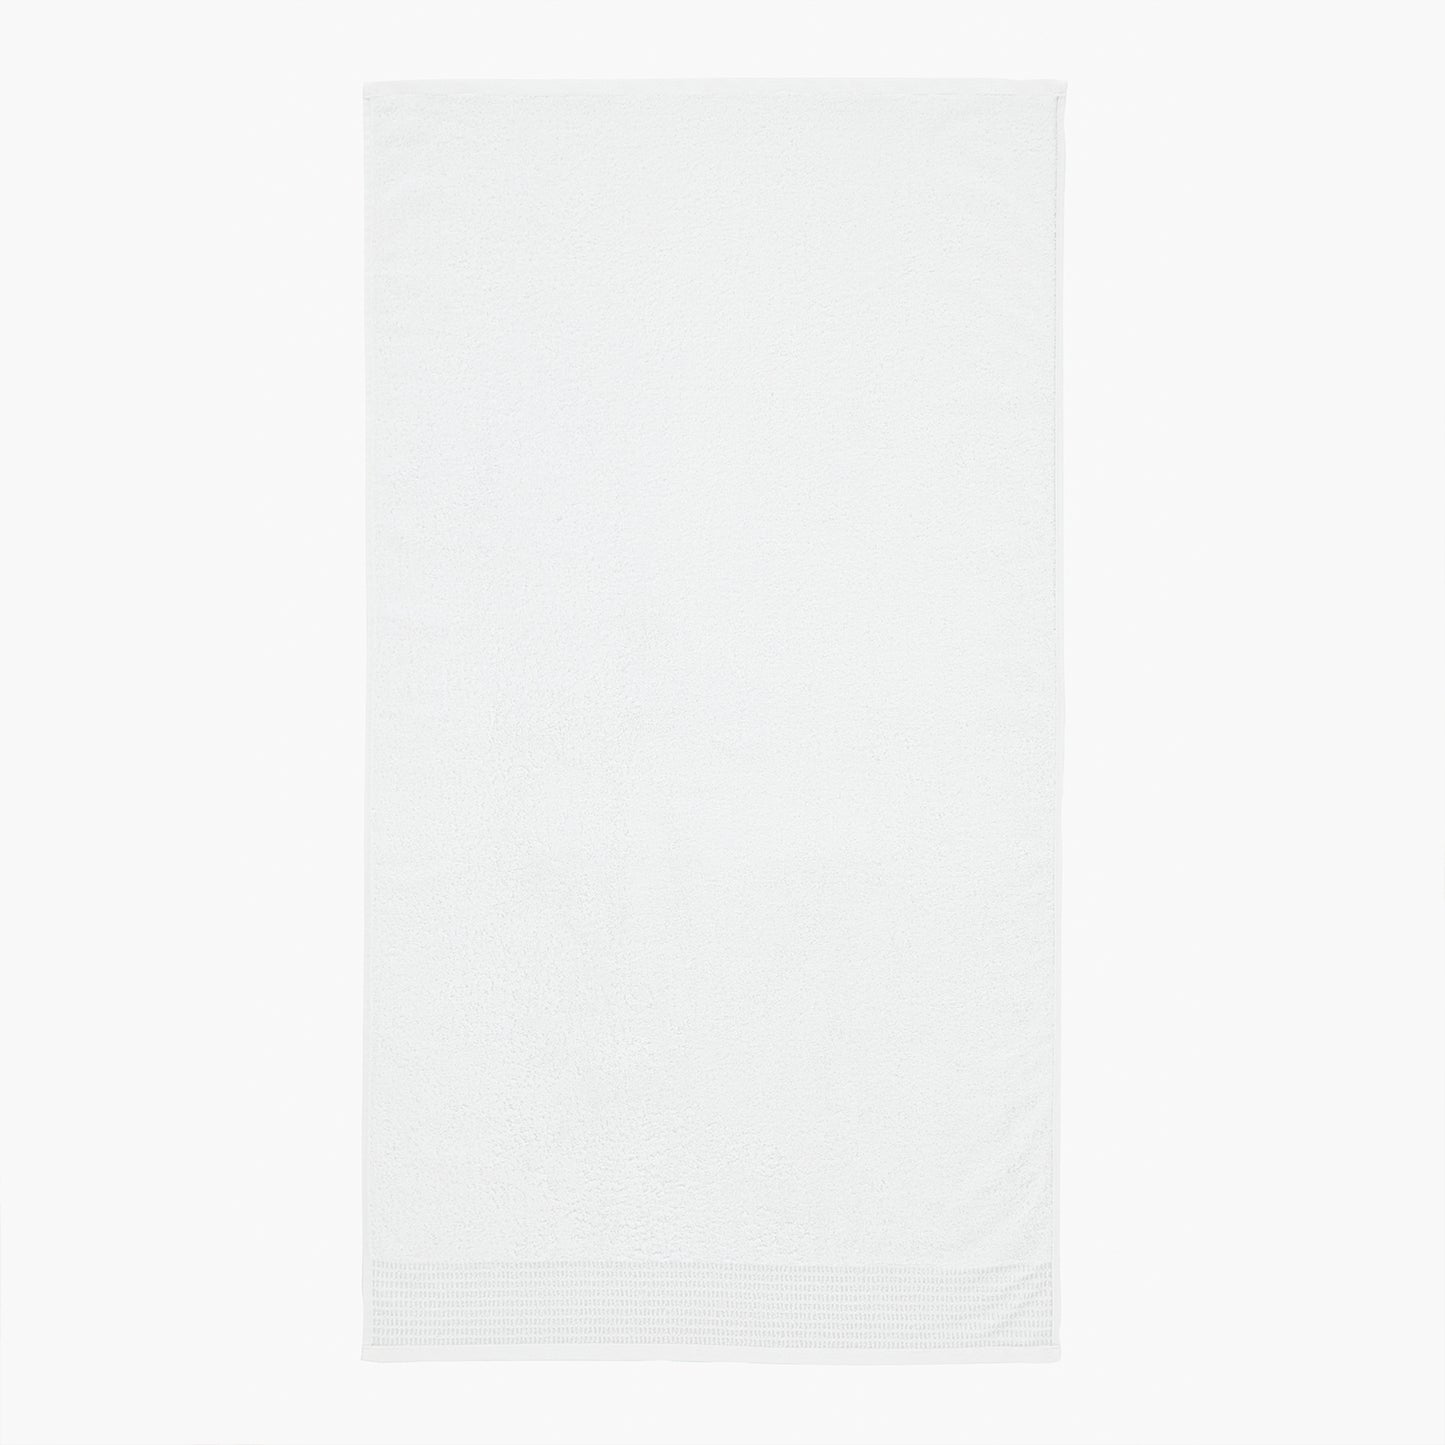 Bianca White Egyptian Cotton Towels